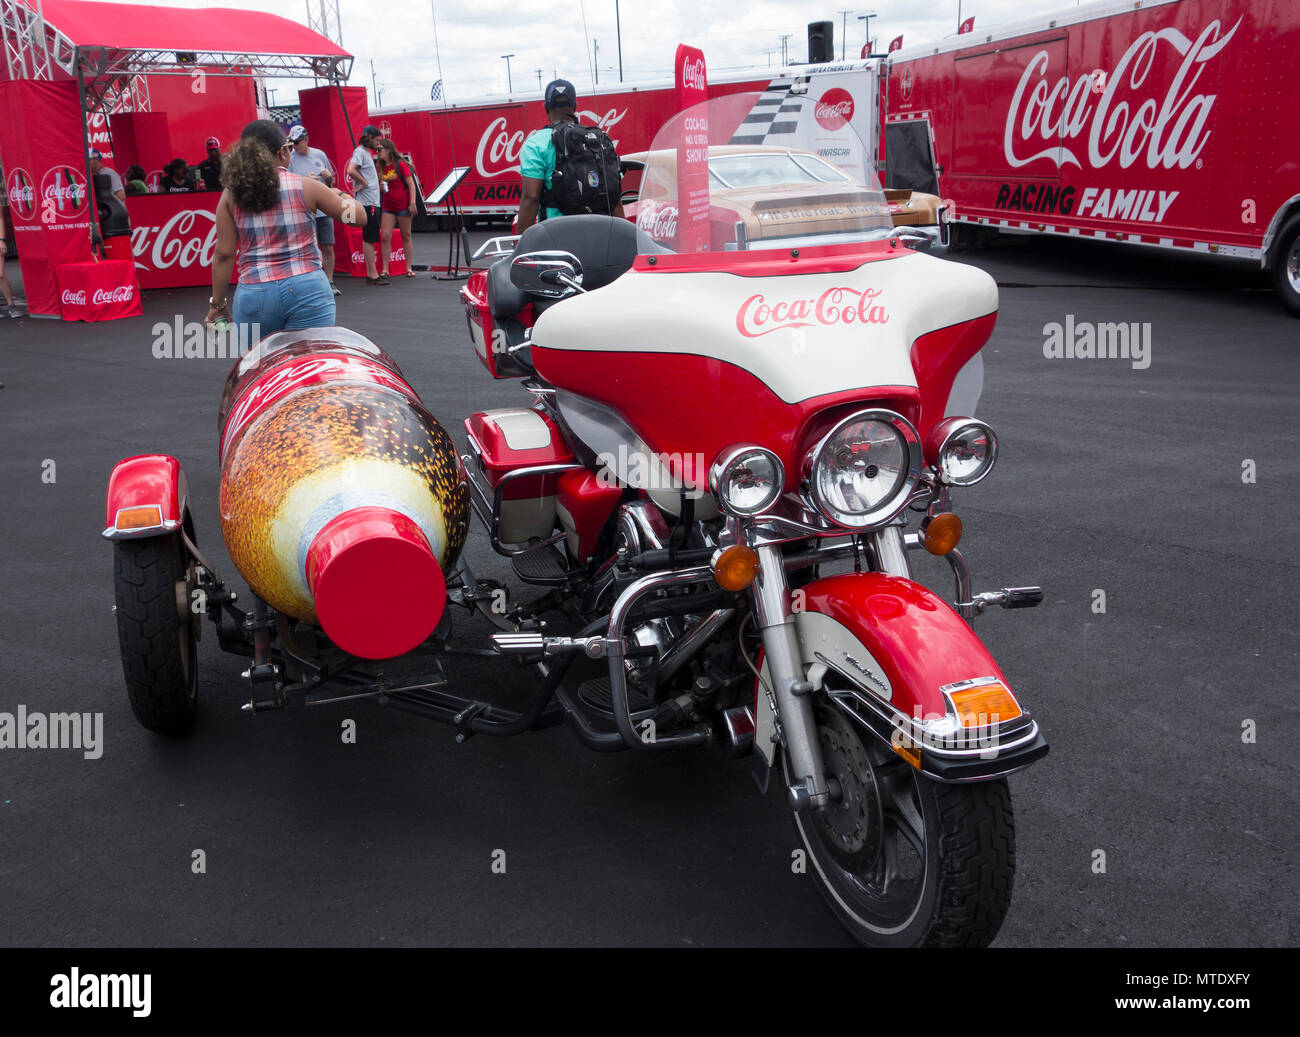 Coca-cola 600 Charlotte Motor Speedway Foto Stock